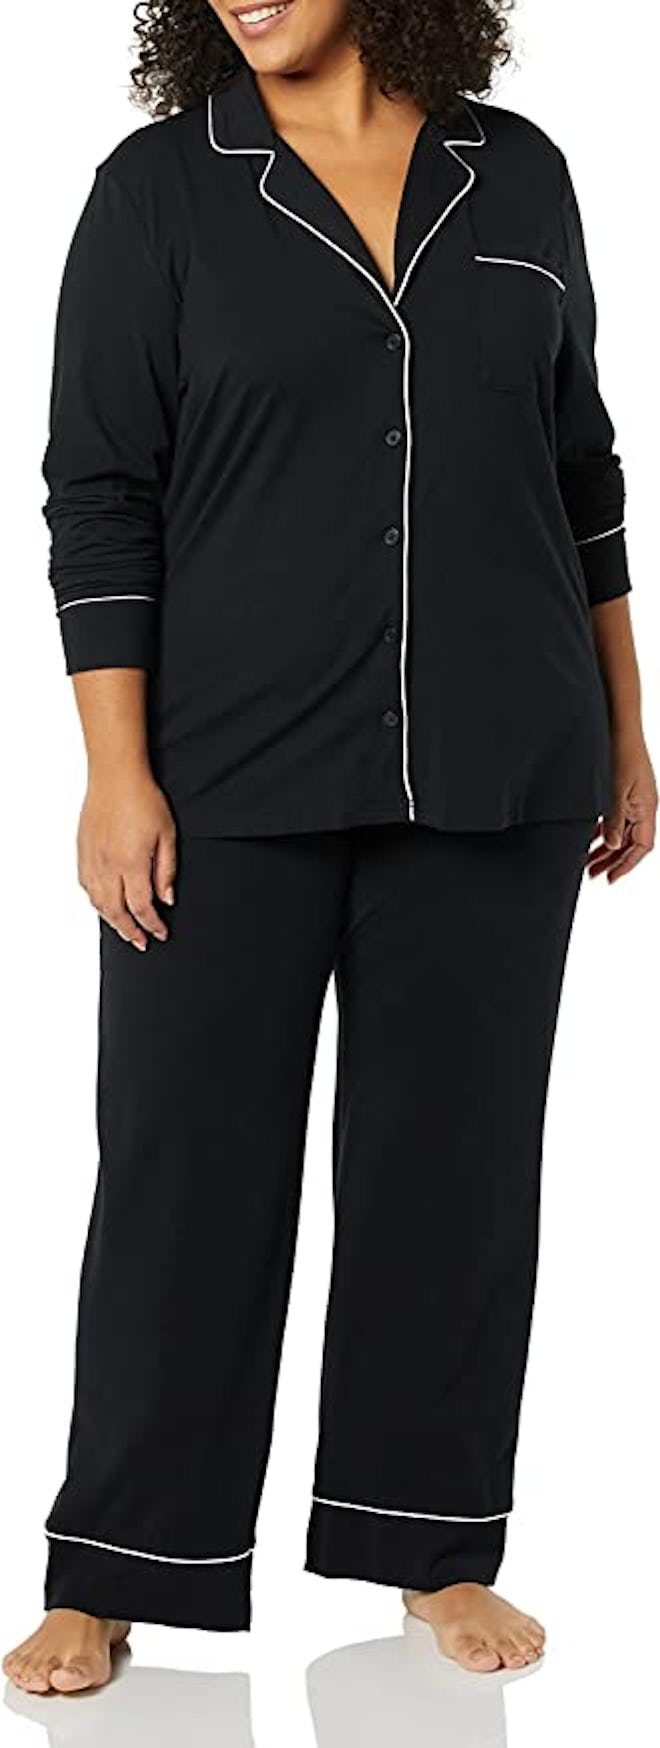 Amazon Essentials Long-Sleeve Shirt and Full-Length Bottom Pajama Set